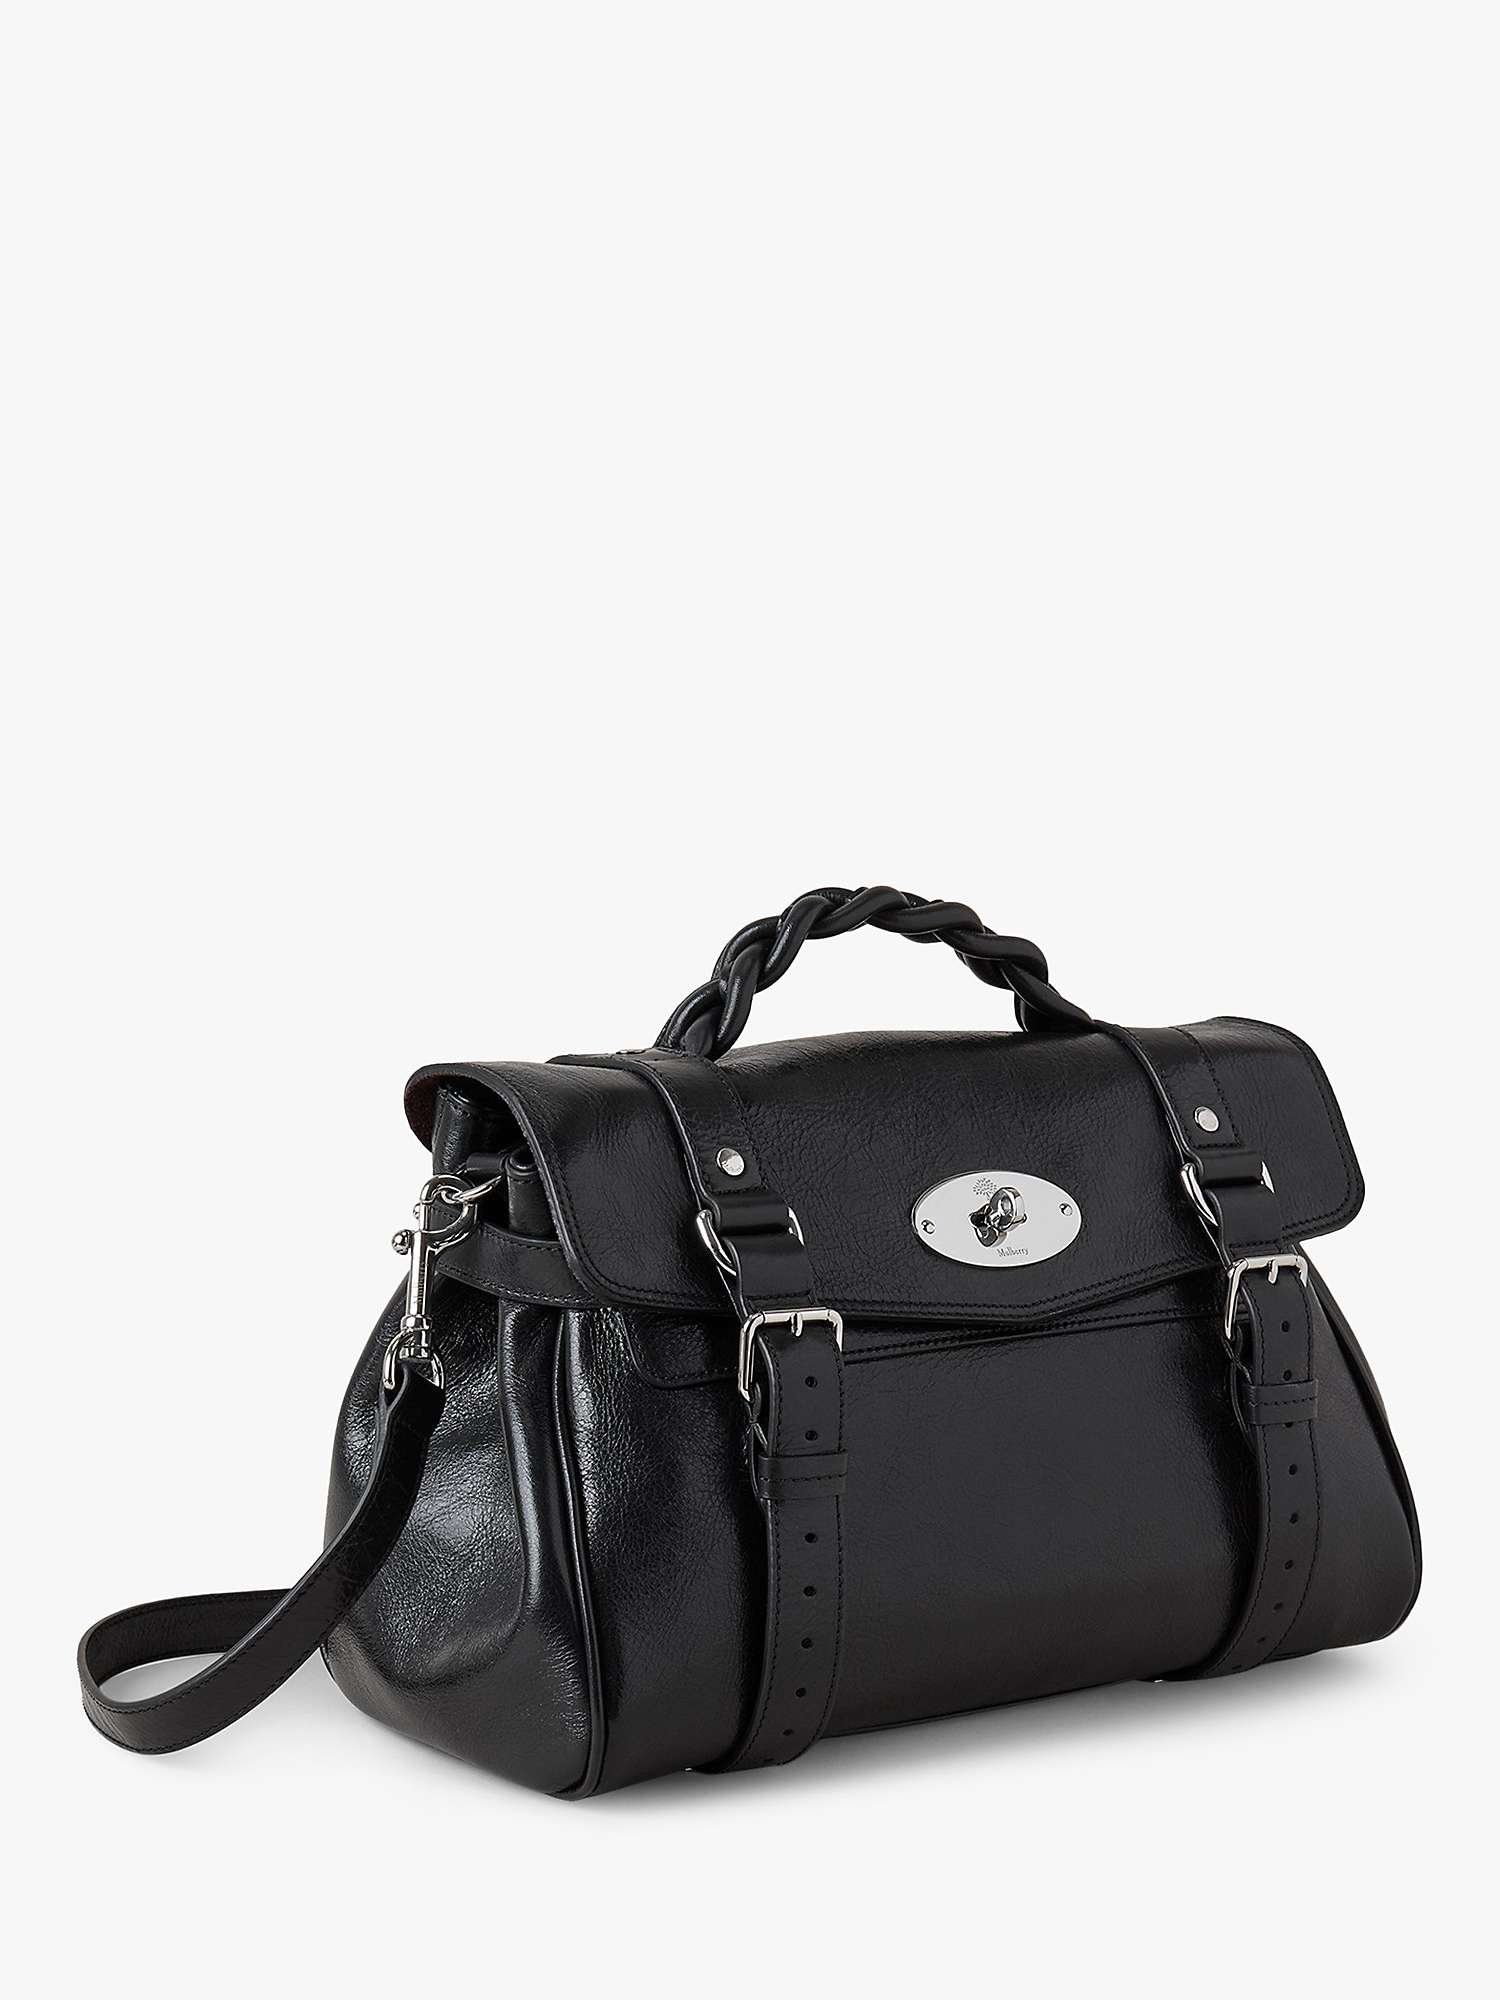 Buy Mulberry Alexa High Shine Leather Shoulder Bag Online at johnlewis.com